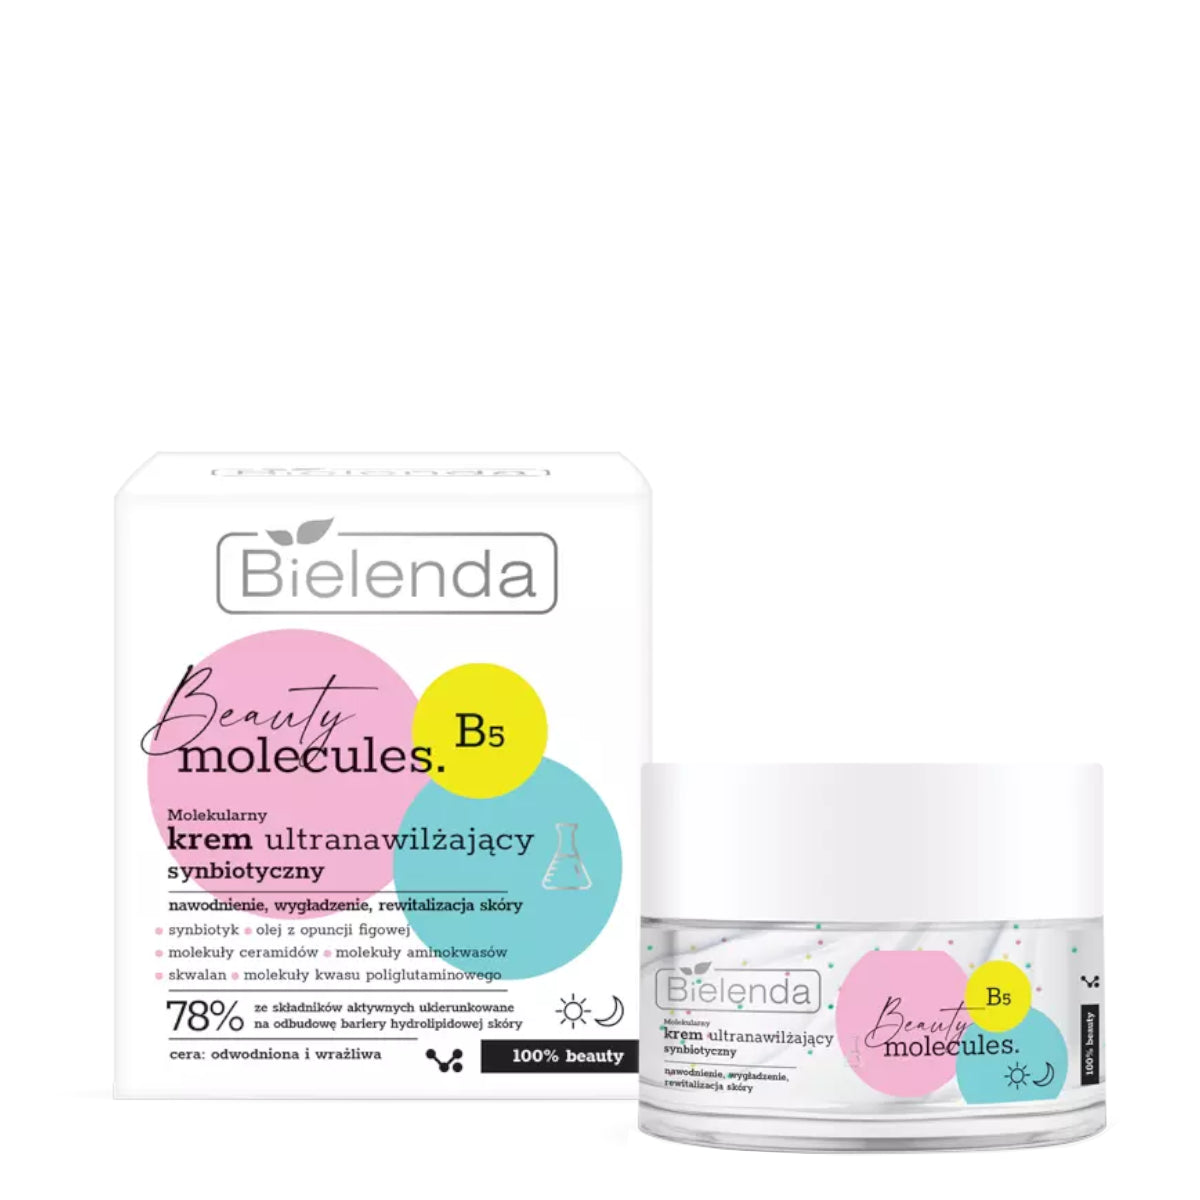 Bielenda Beauty Molecules Ultra-Moisturising Cream